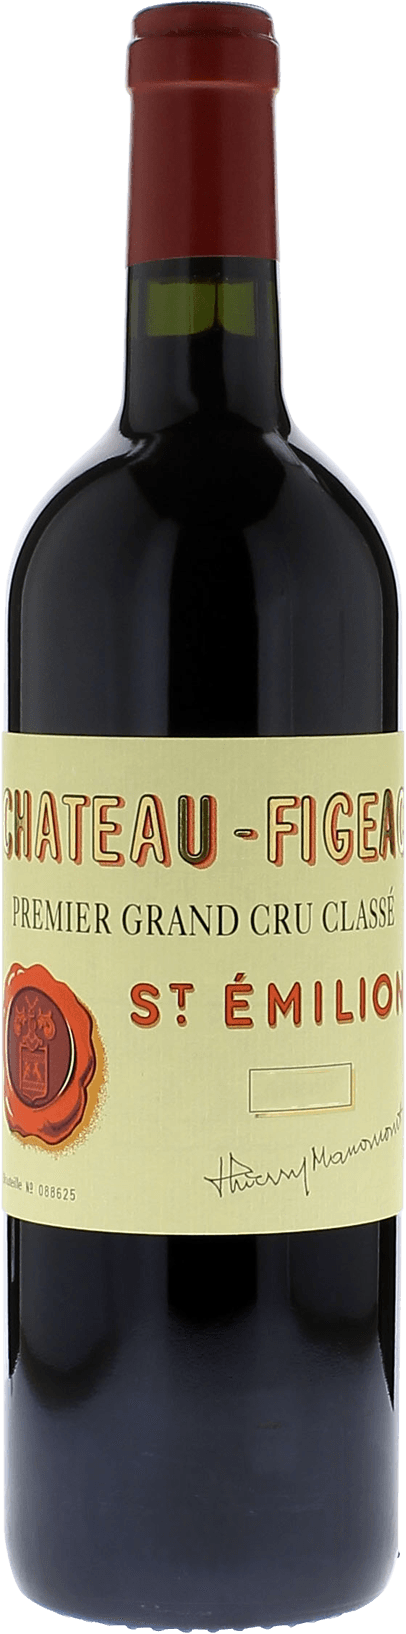 Figeac 2016 1er Grand cru B class Saint-Emilion, Bordeaux rouge